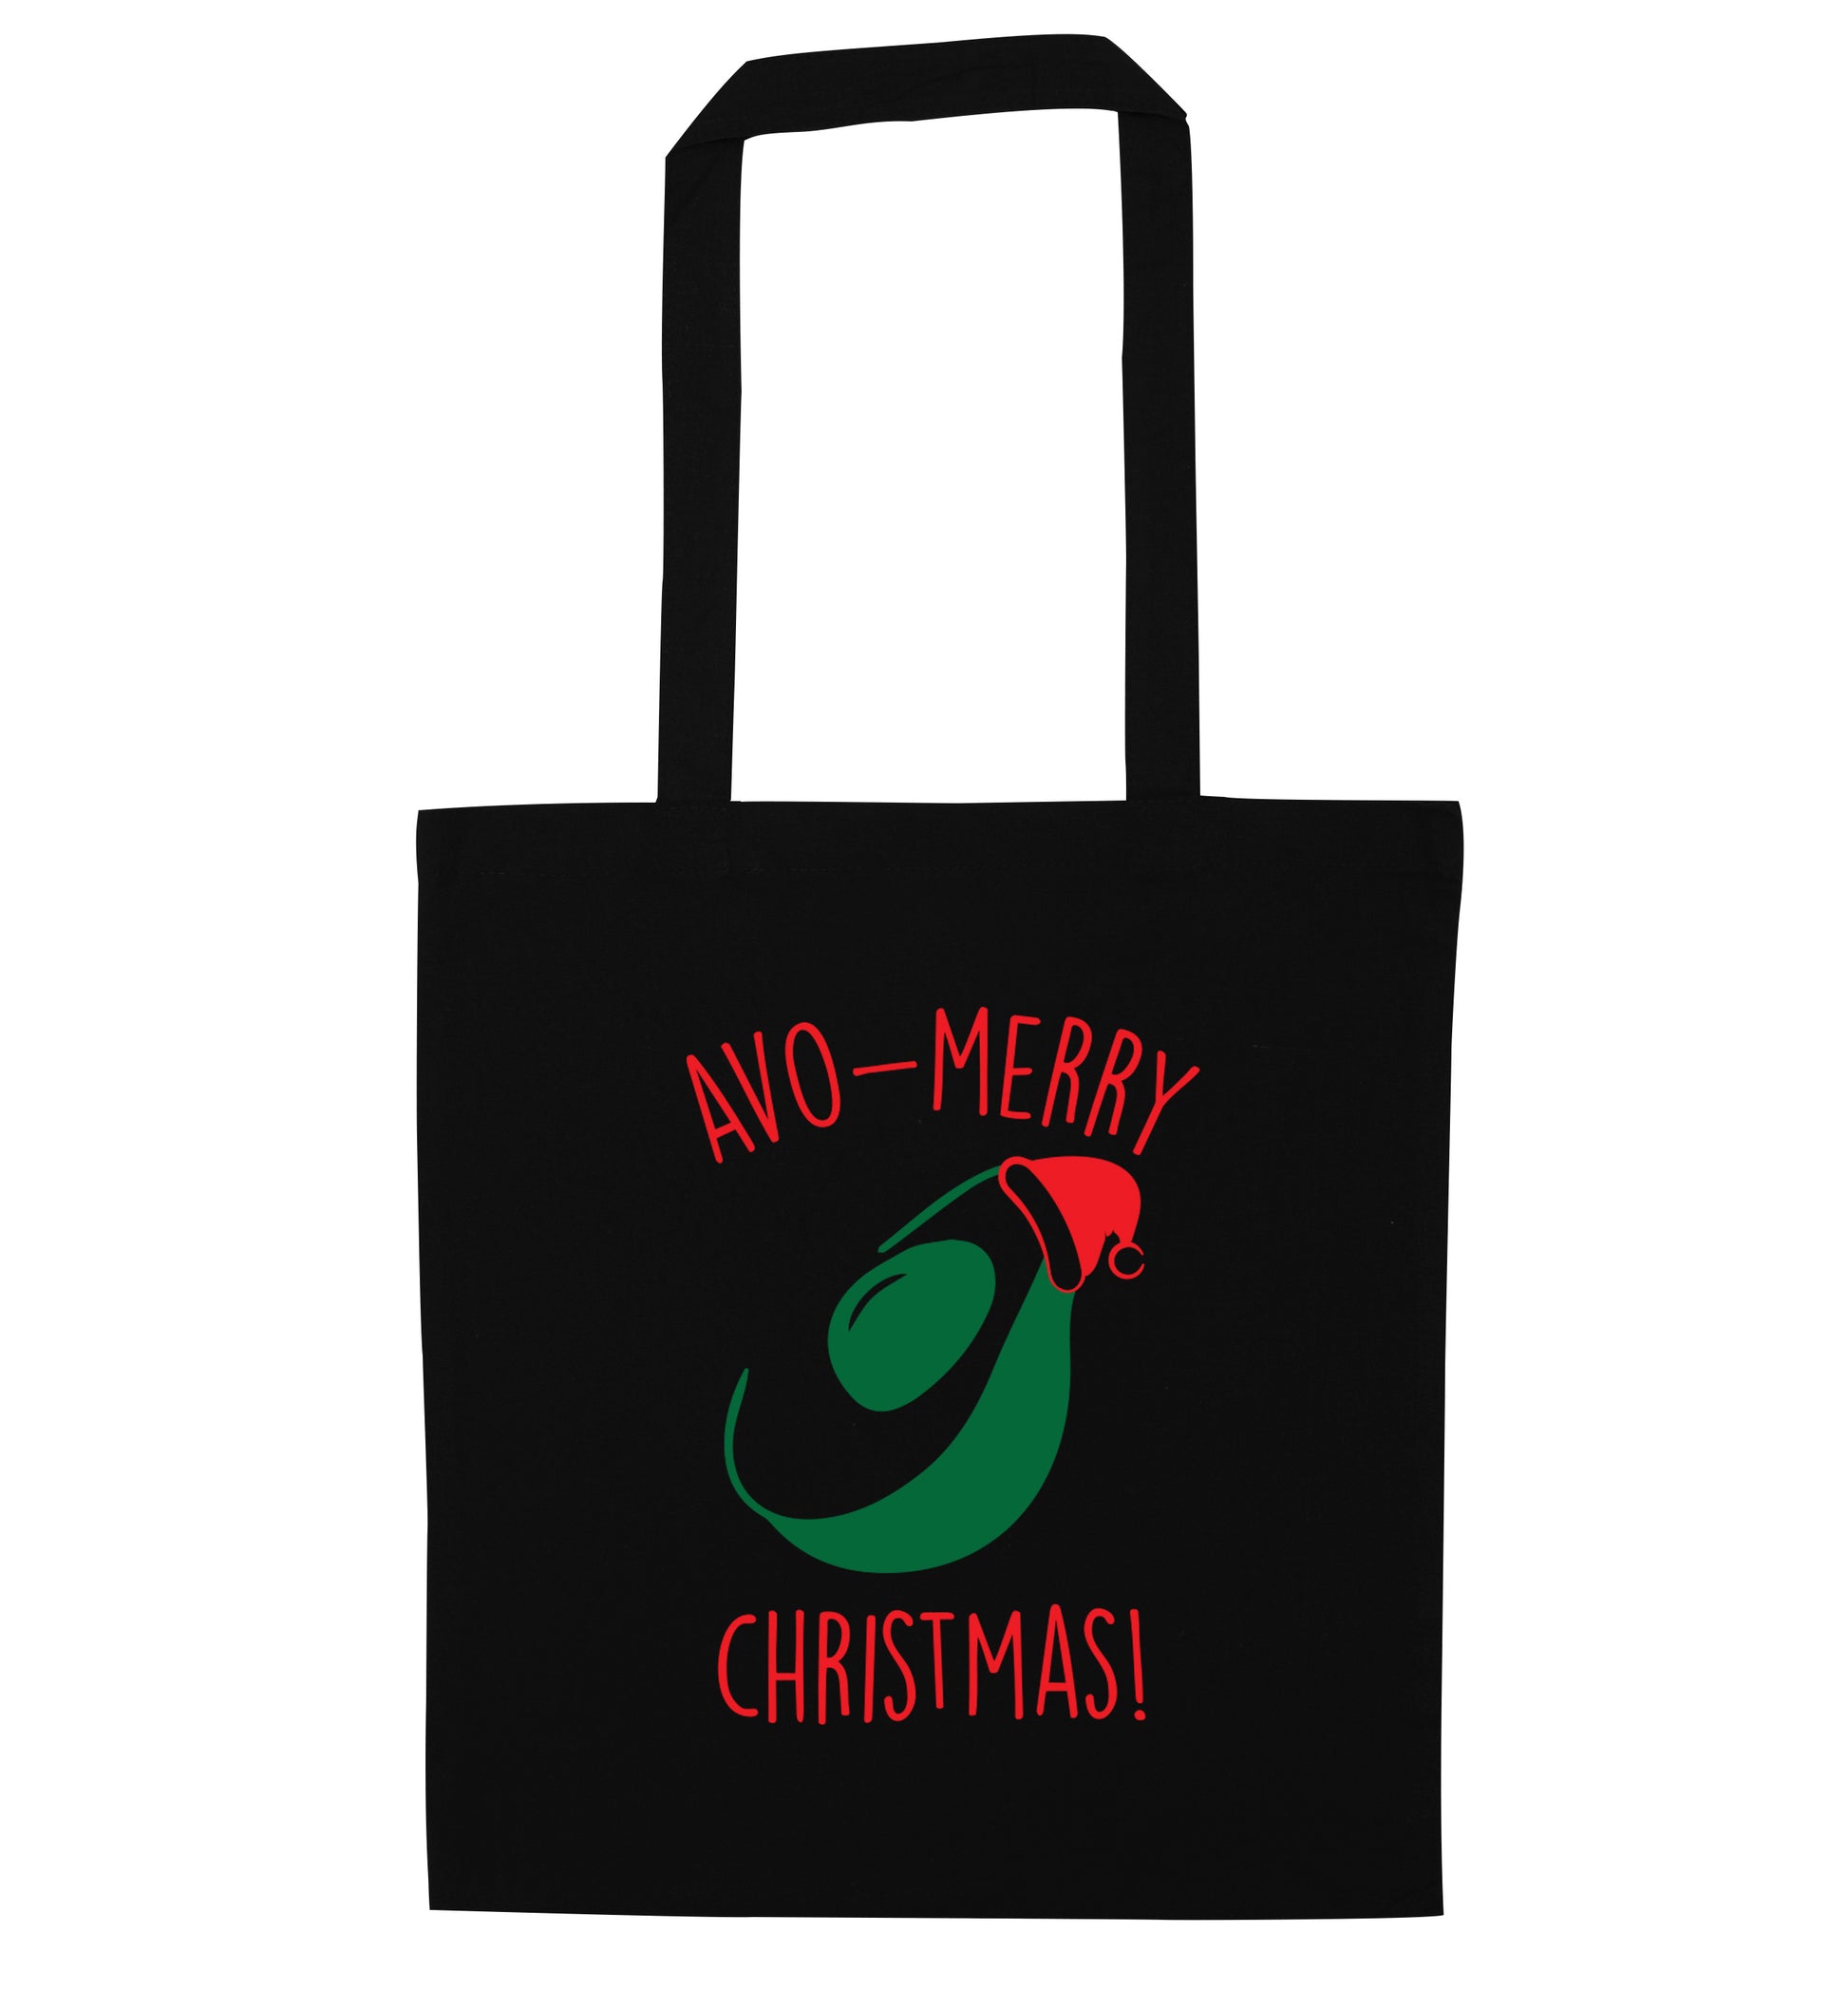 Avo-Merry Christmas black tote bag